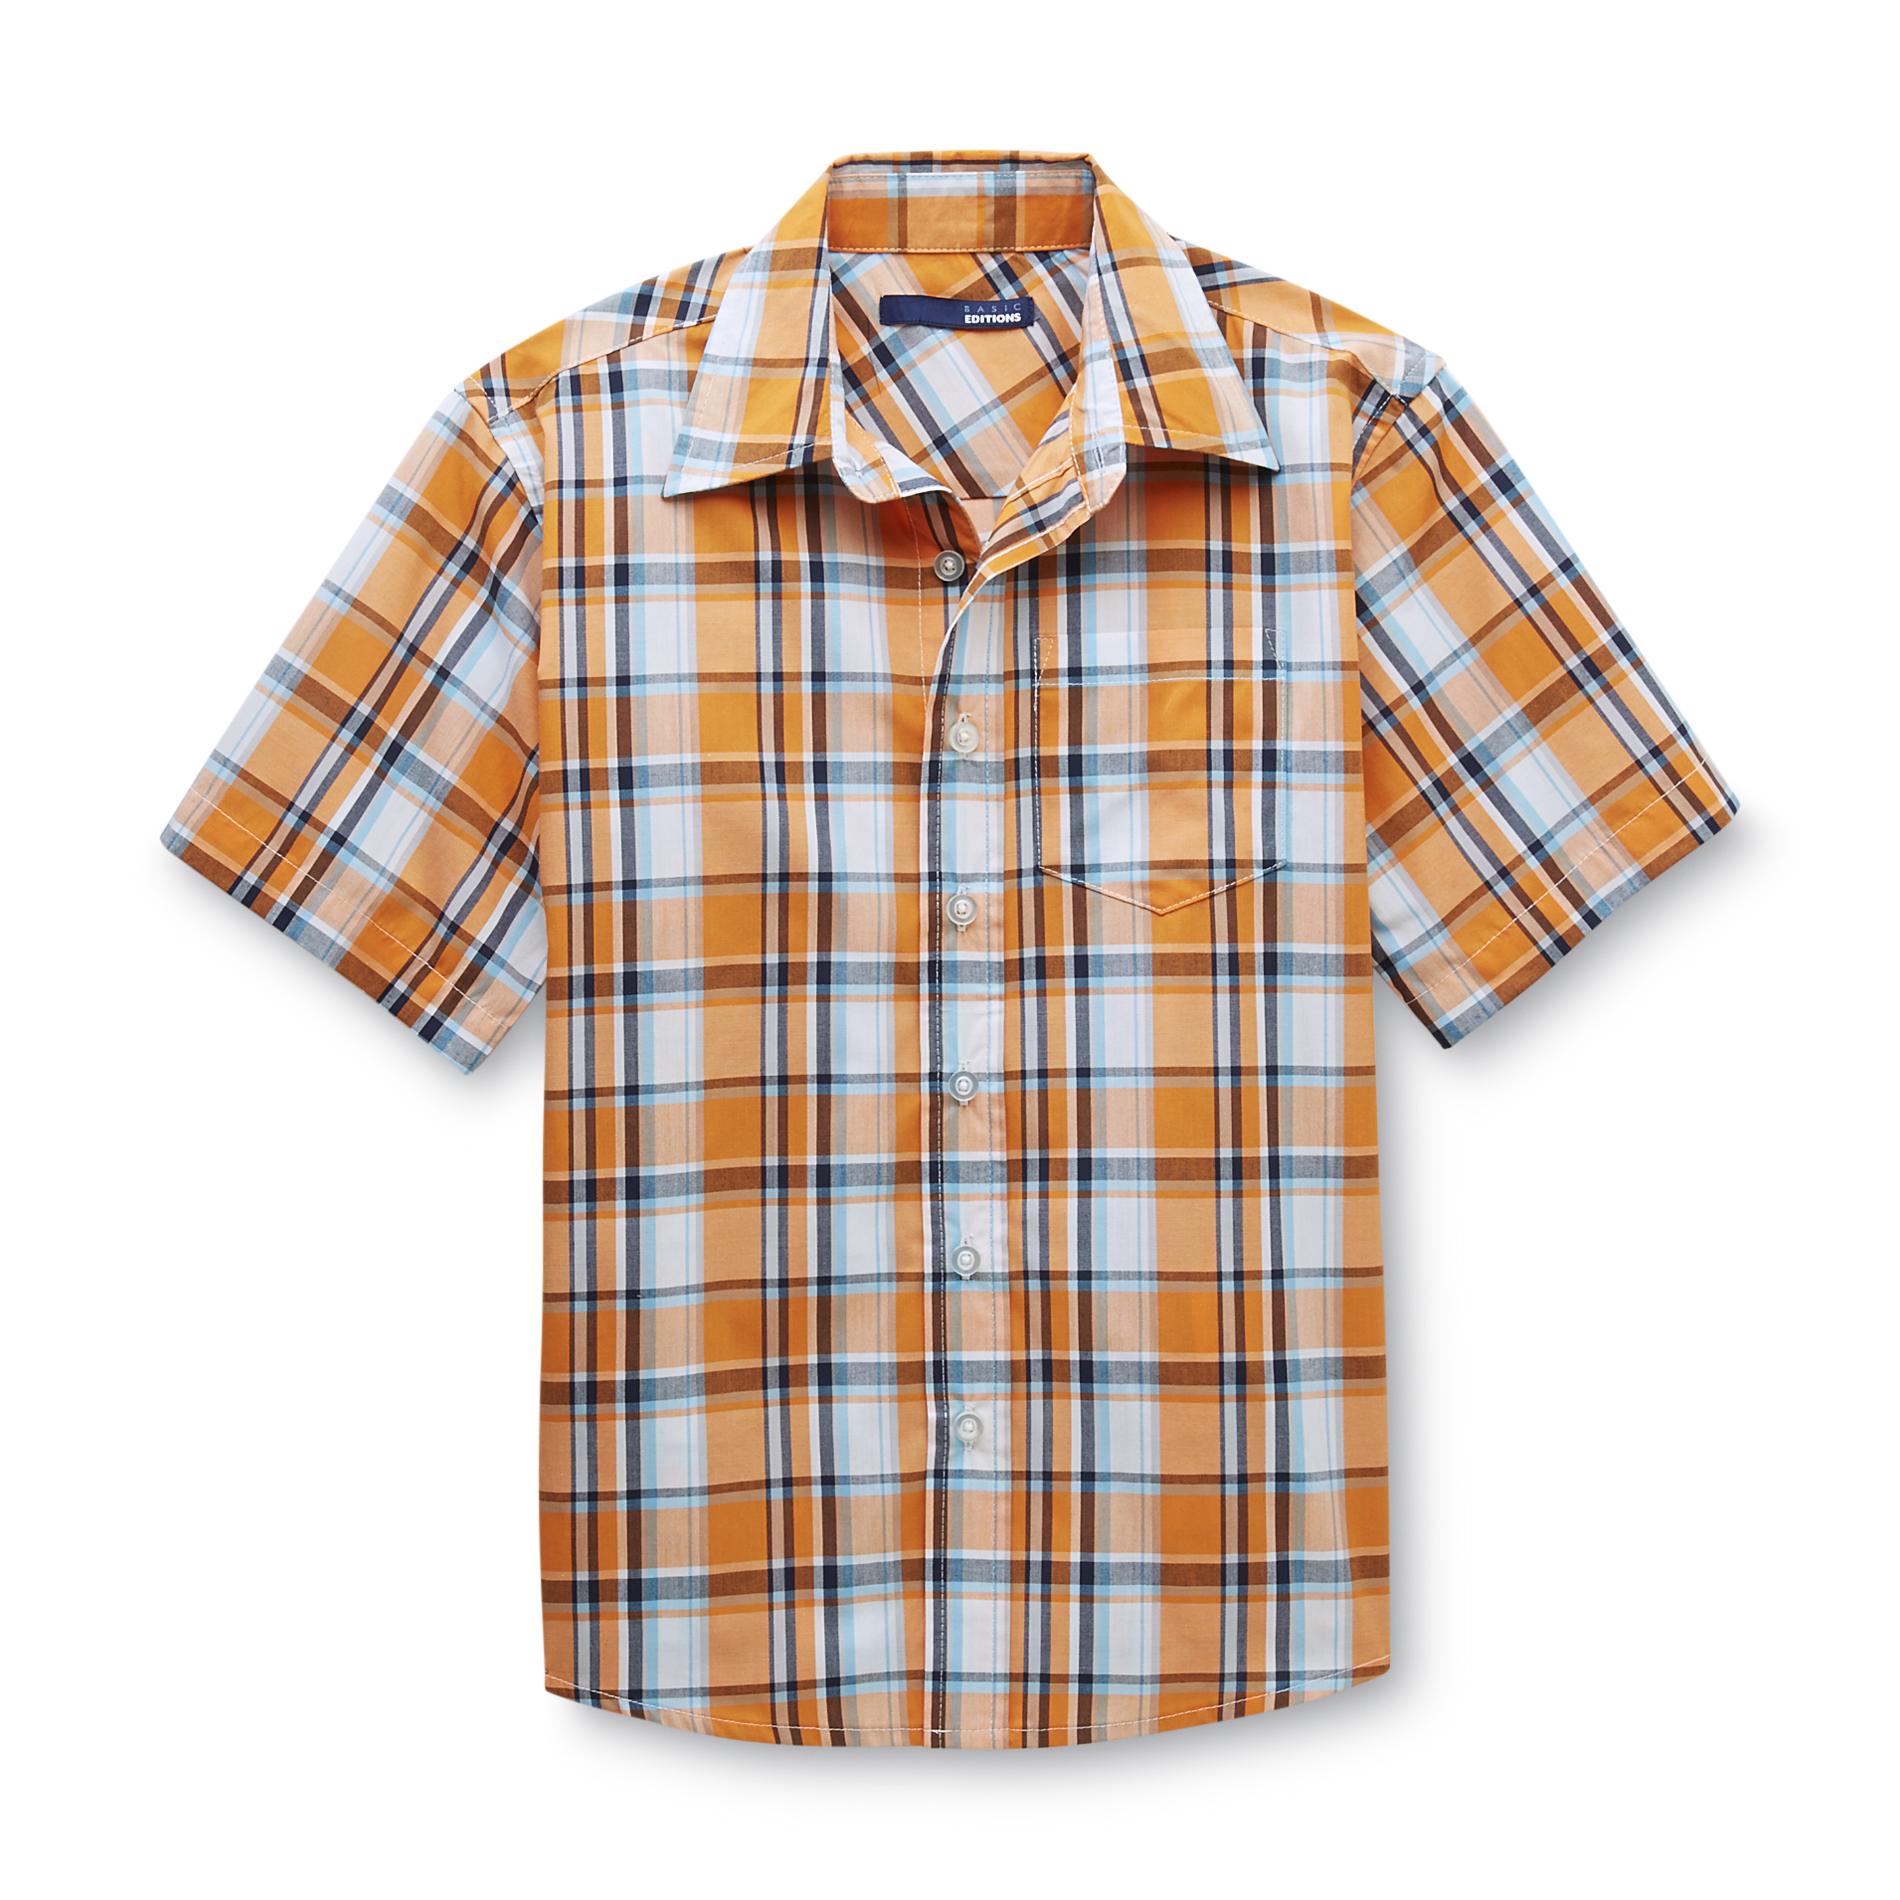 Basic Editions Boy's Woven Short-Sleeve Shirt - Plaid